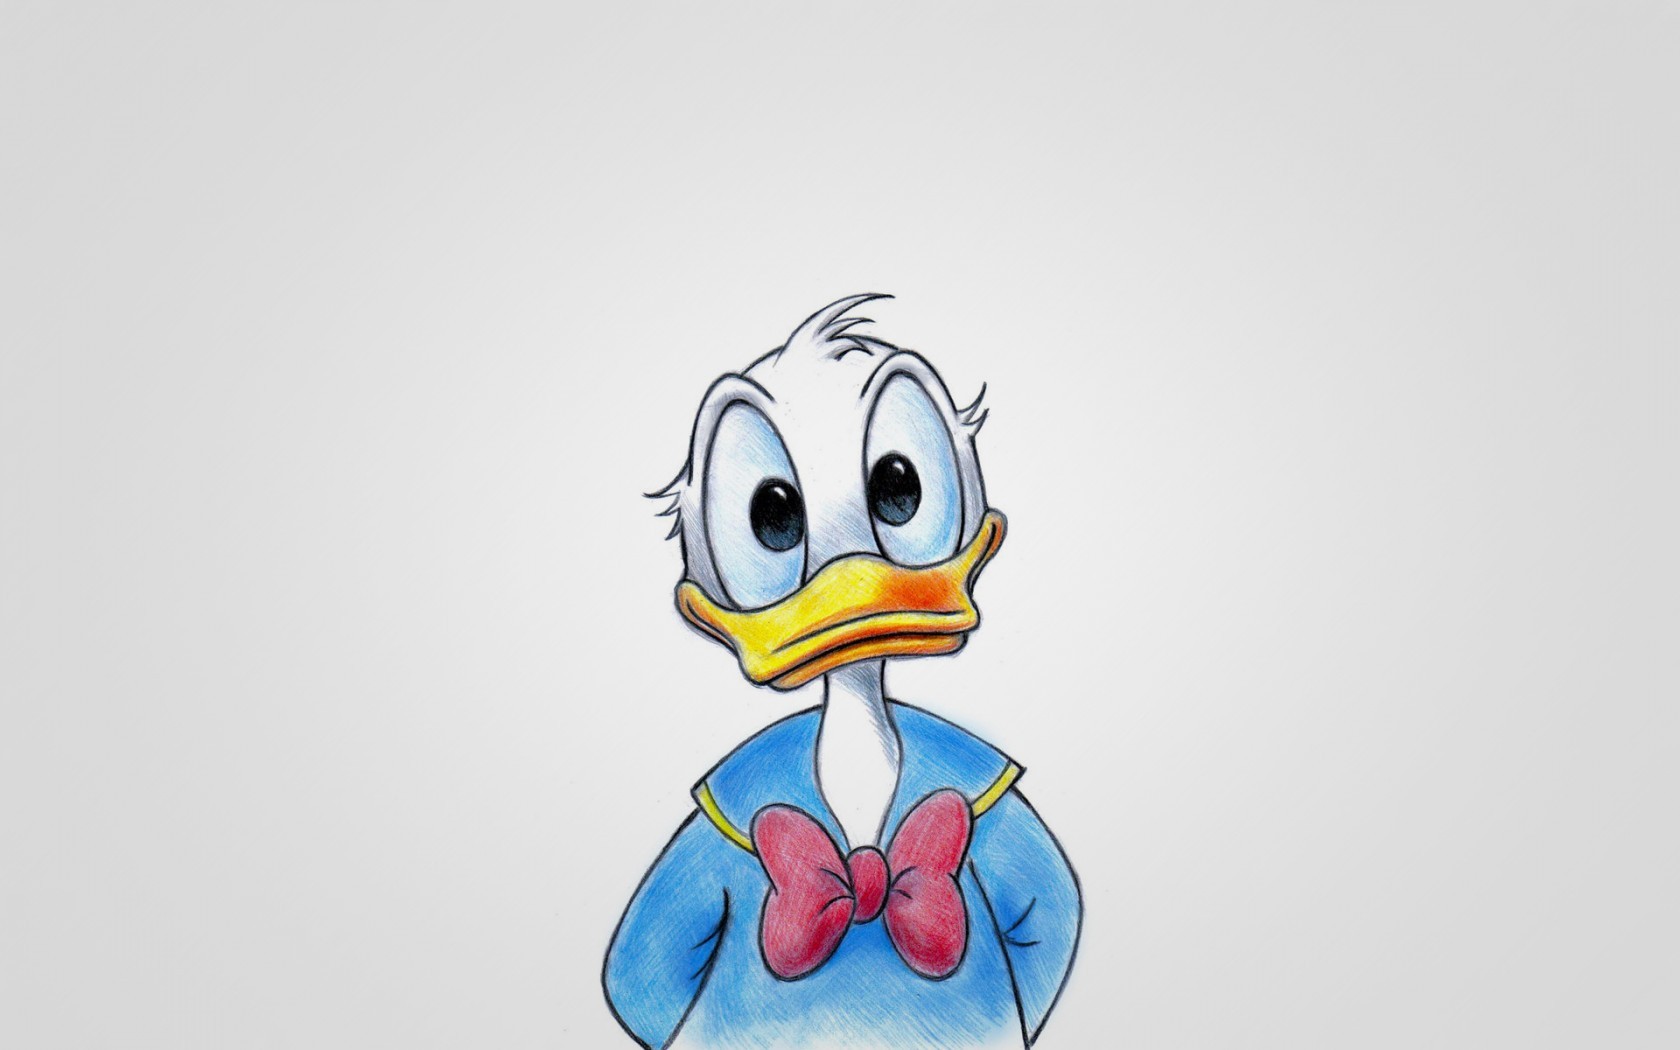 General 1680x1050 artwork Donald Duck Walt Disney cartoon simple background drawing looking at viewer white background Disney